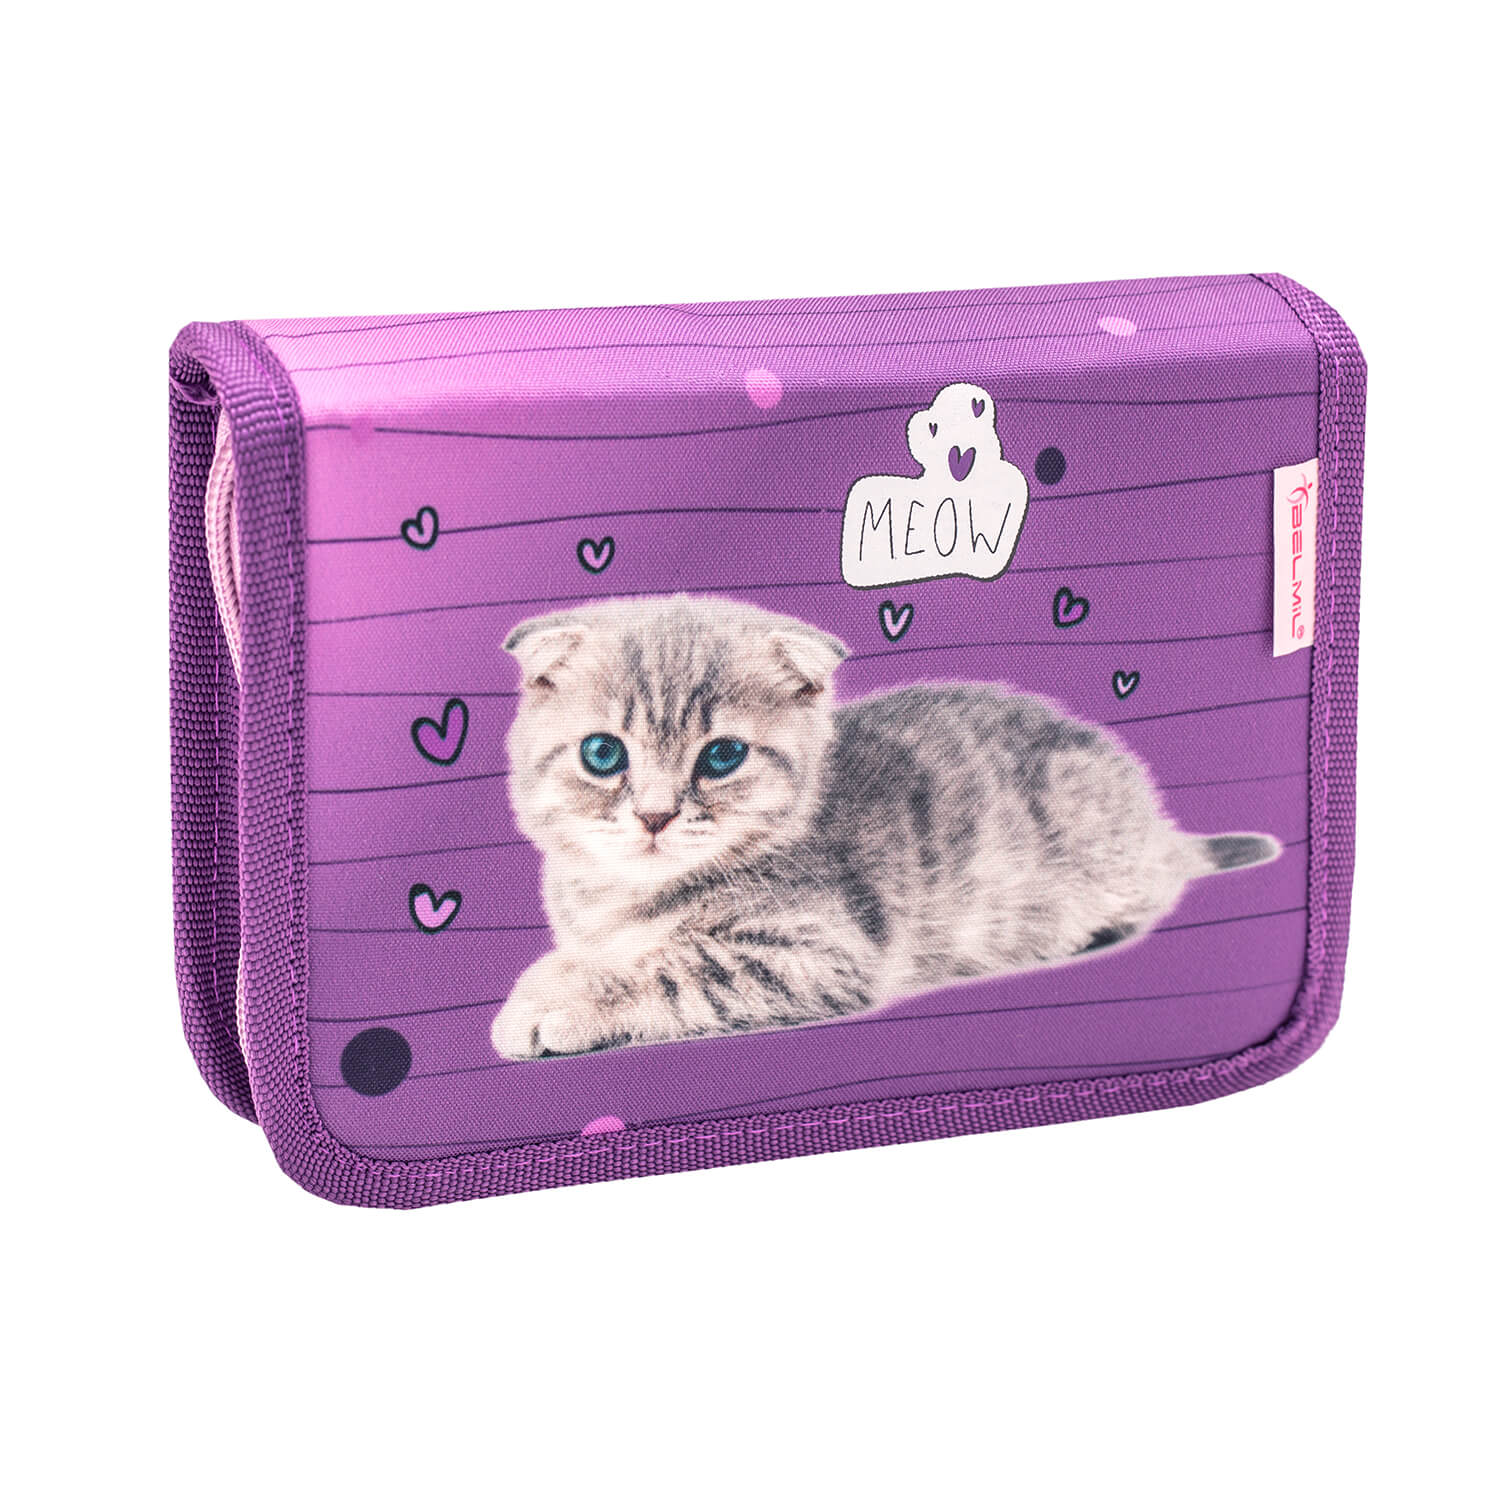 Customize Me Little Caty schoolbag set 4 pcs